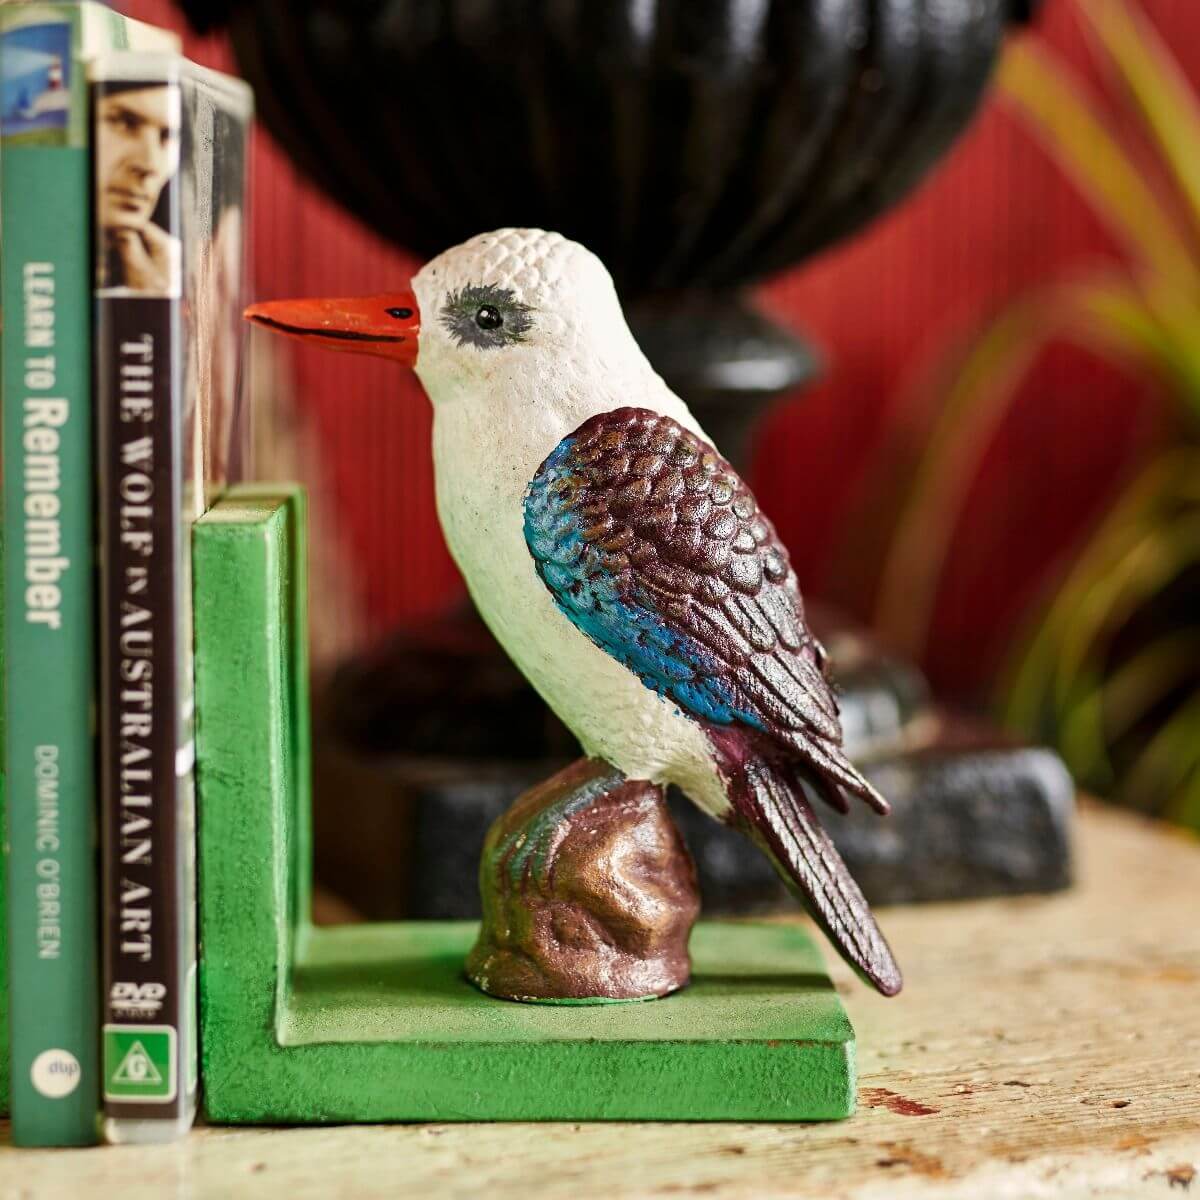 Book Ends Bookend Kookaburra Bird - The Renmy Store Homewares & Gifts 